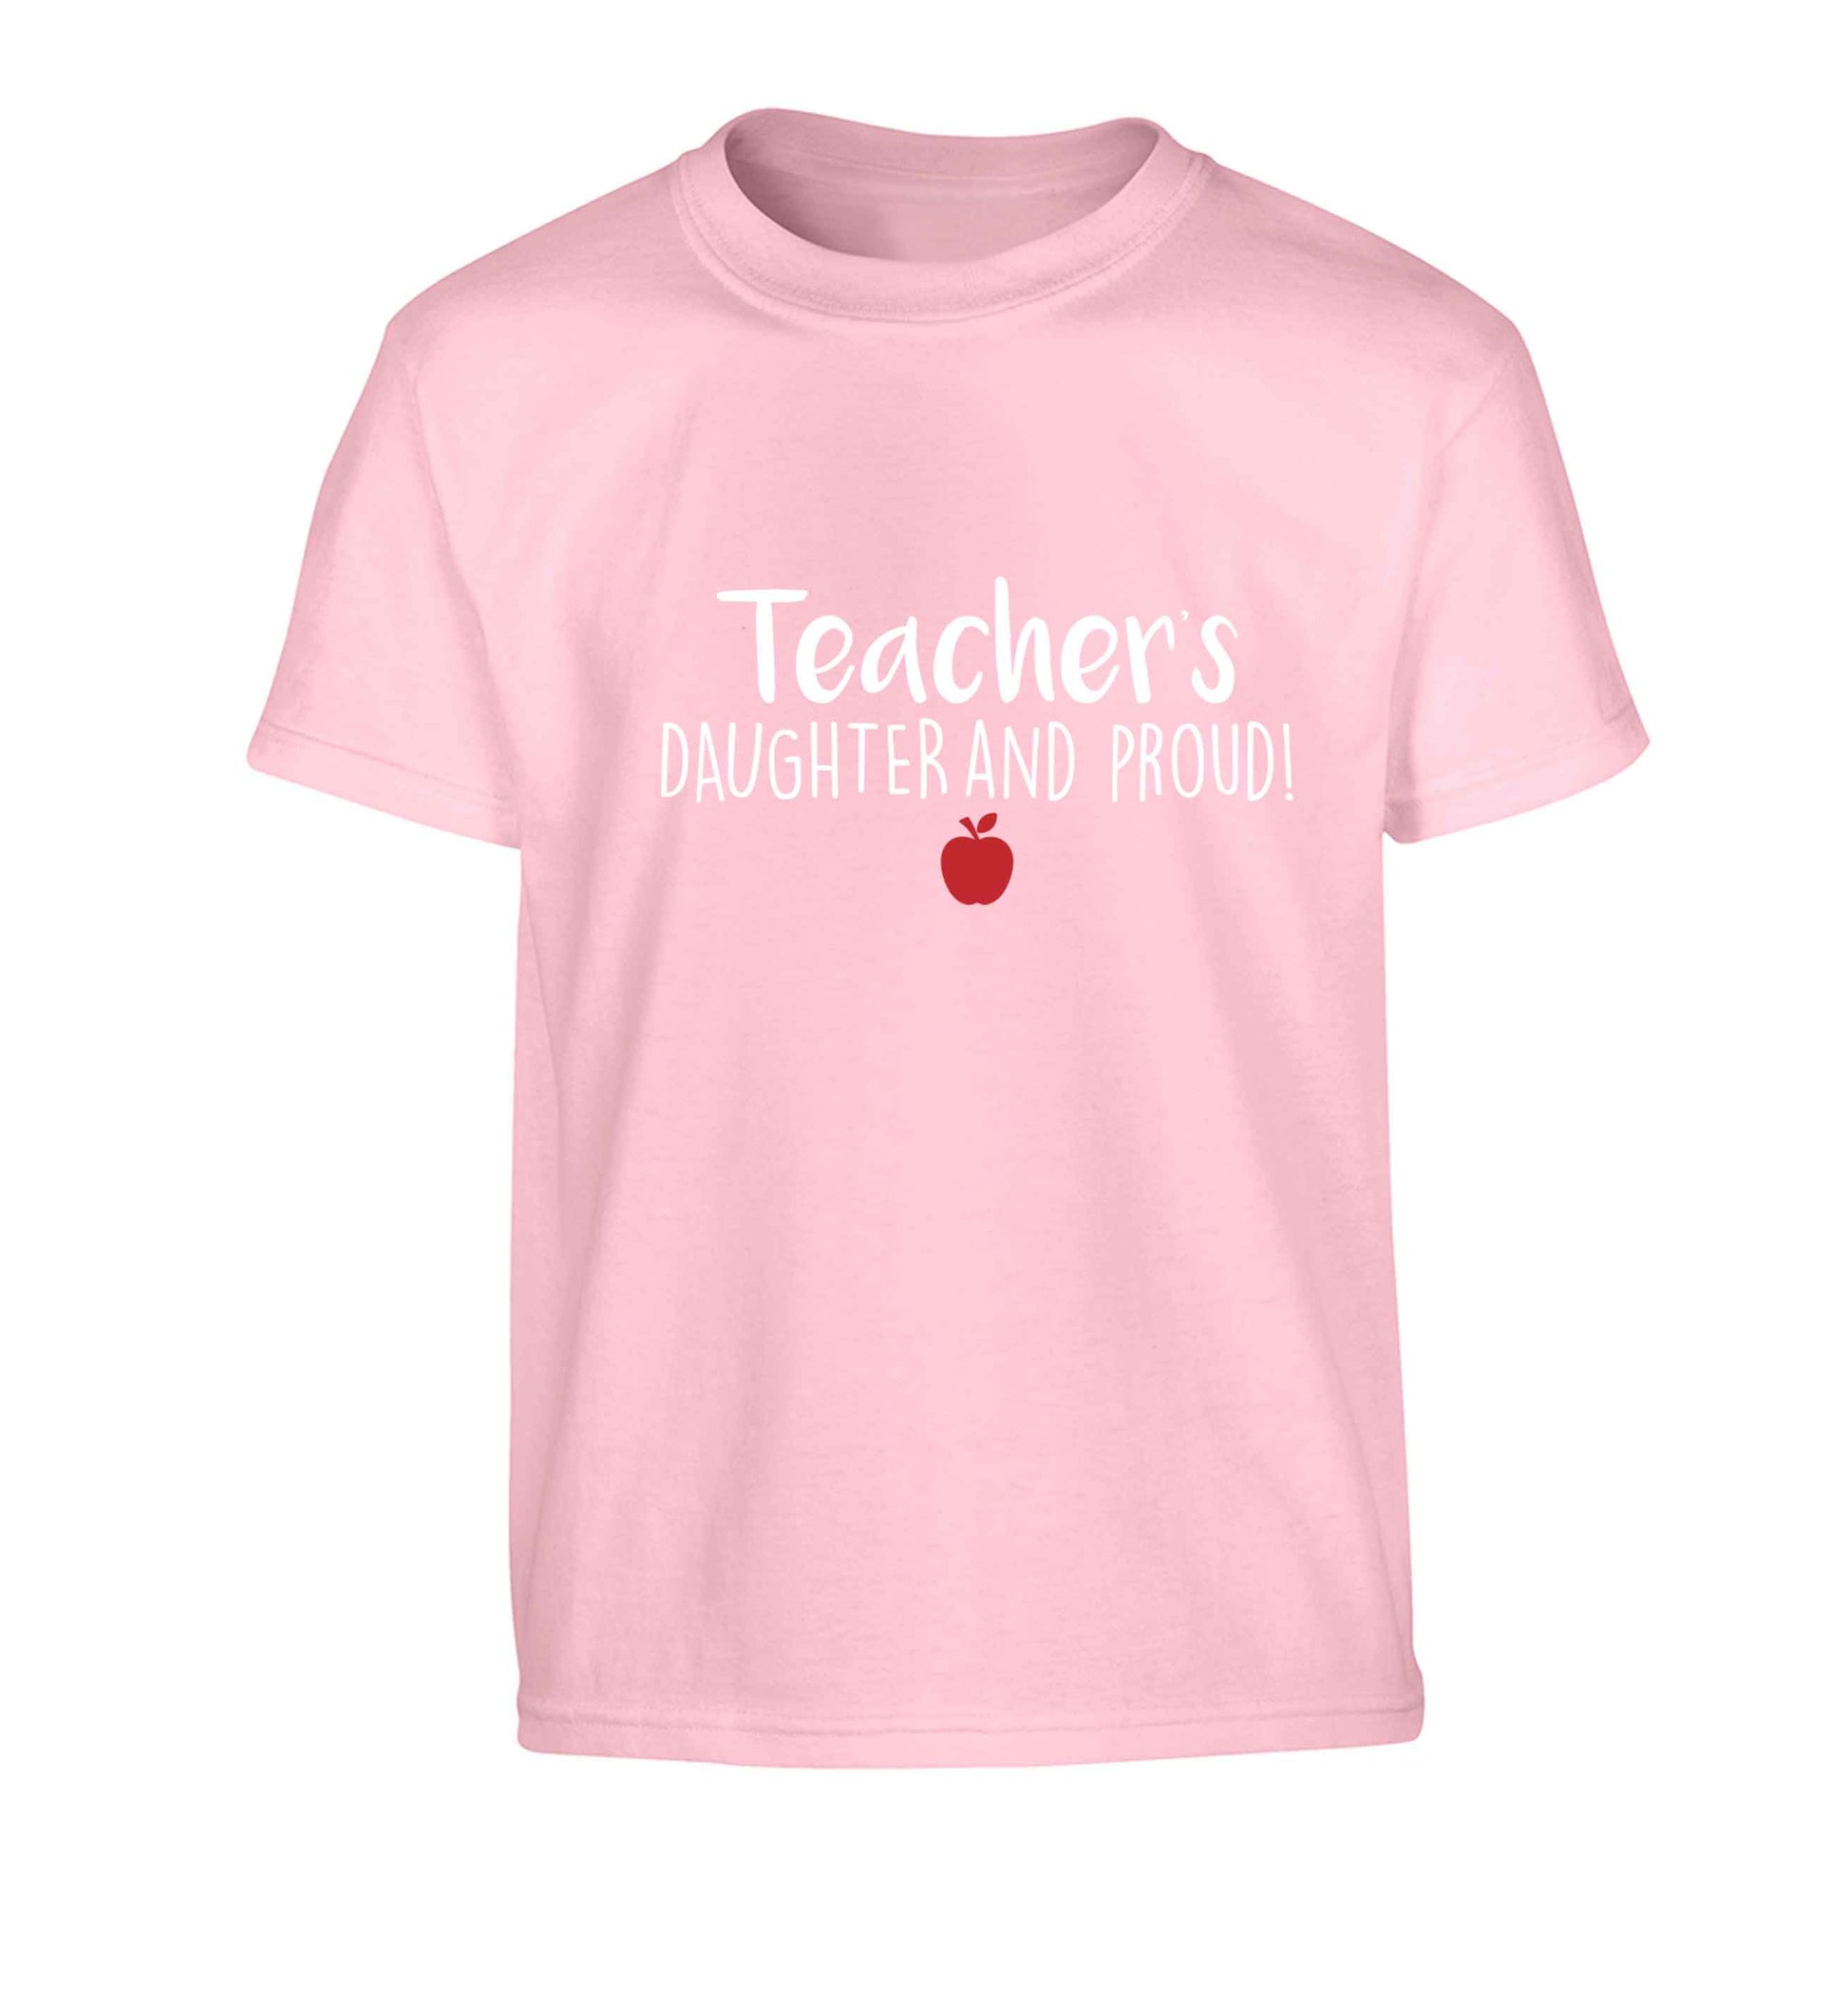 Teachers daughter and proud Children's light pink Tshirt 12-13 Years